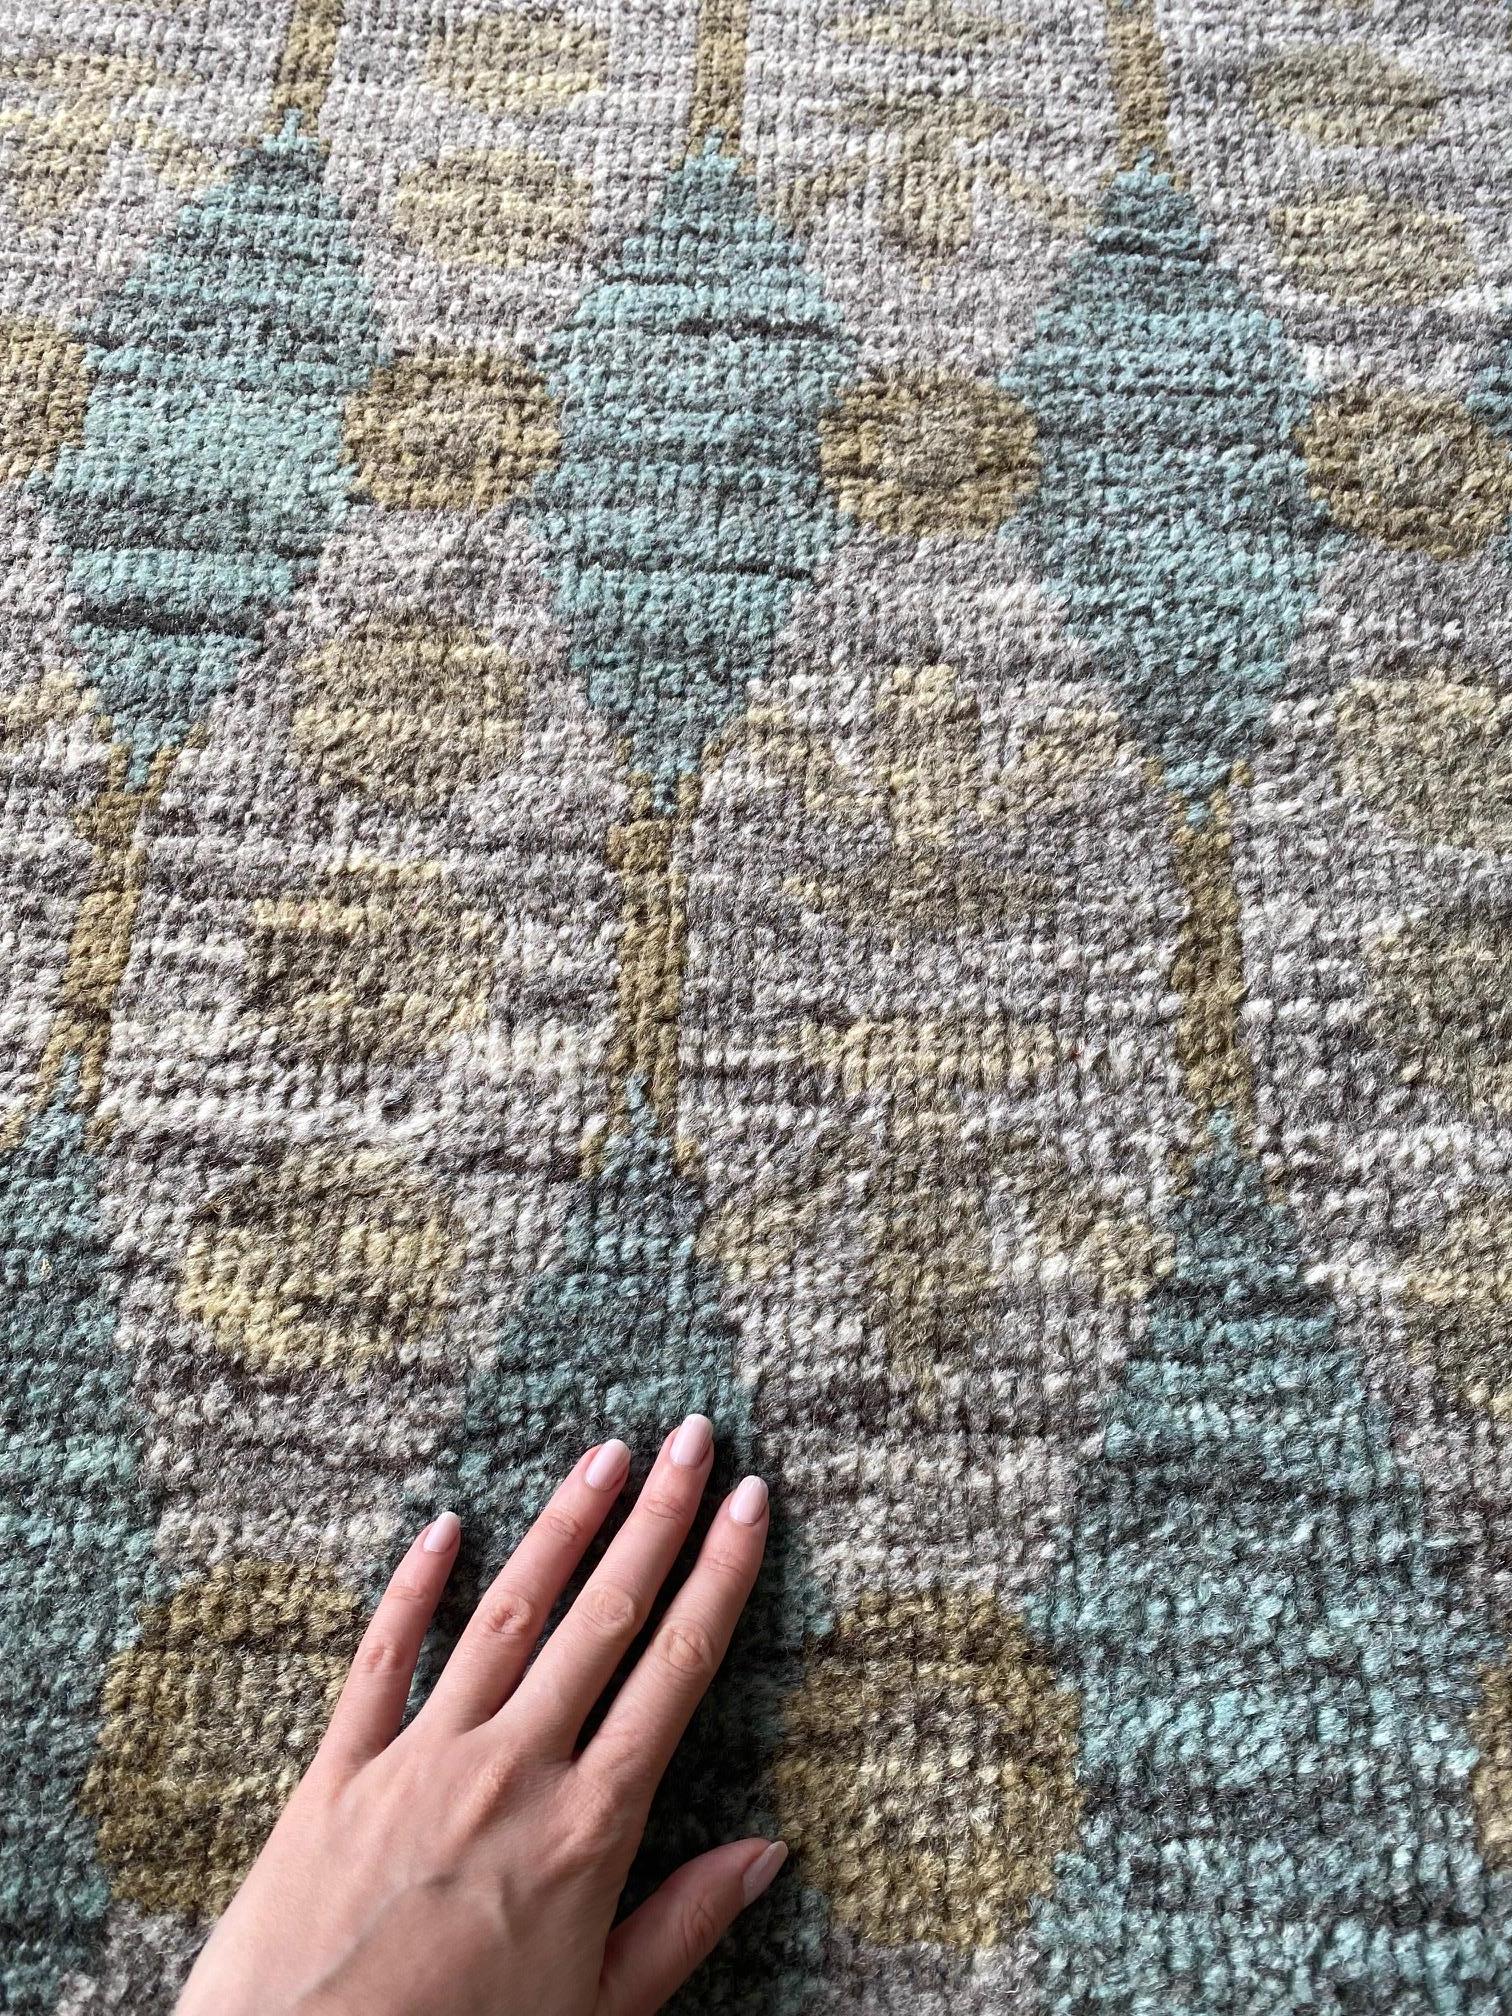 Contemporary Aegean green handmade rug by Bunny Williams for Doris Leslie Blau.
Size: 11'8